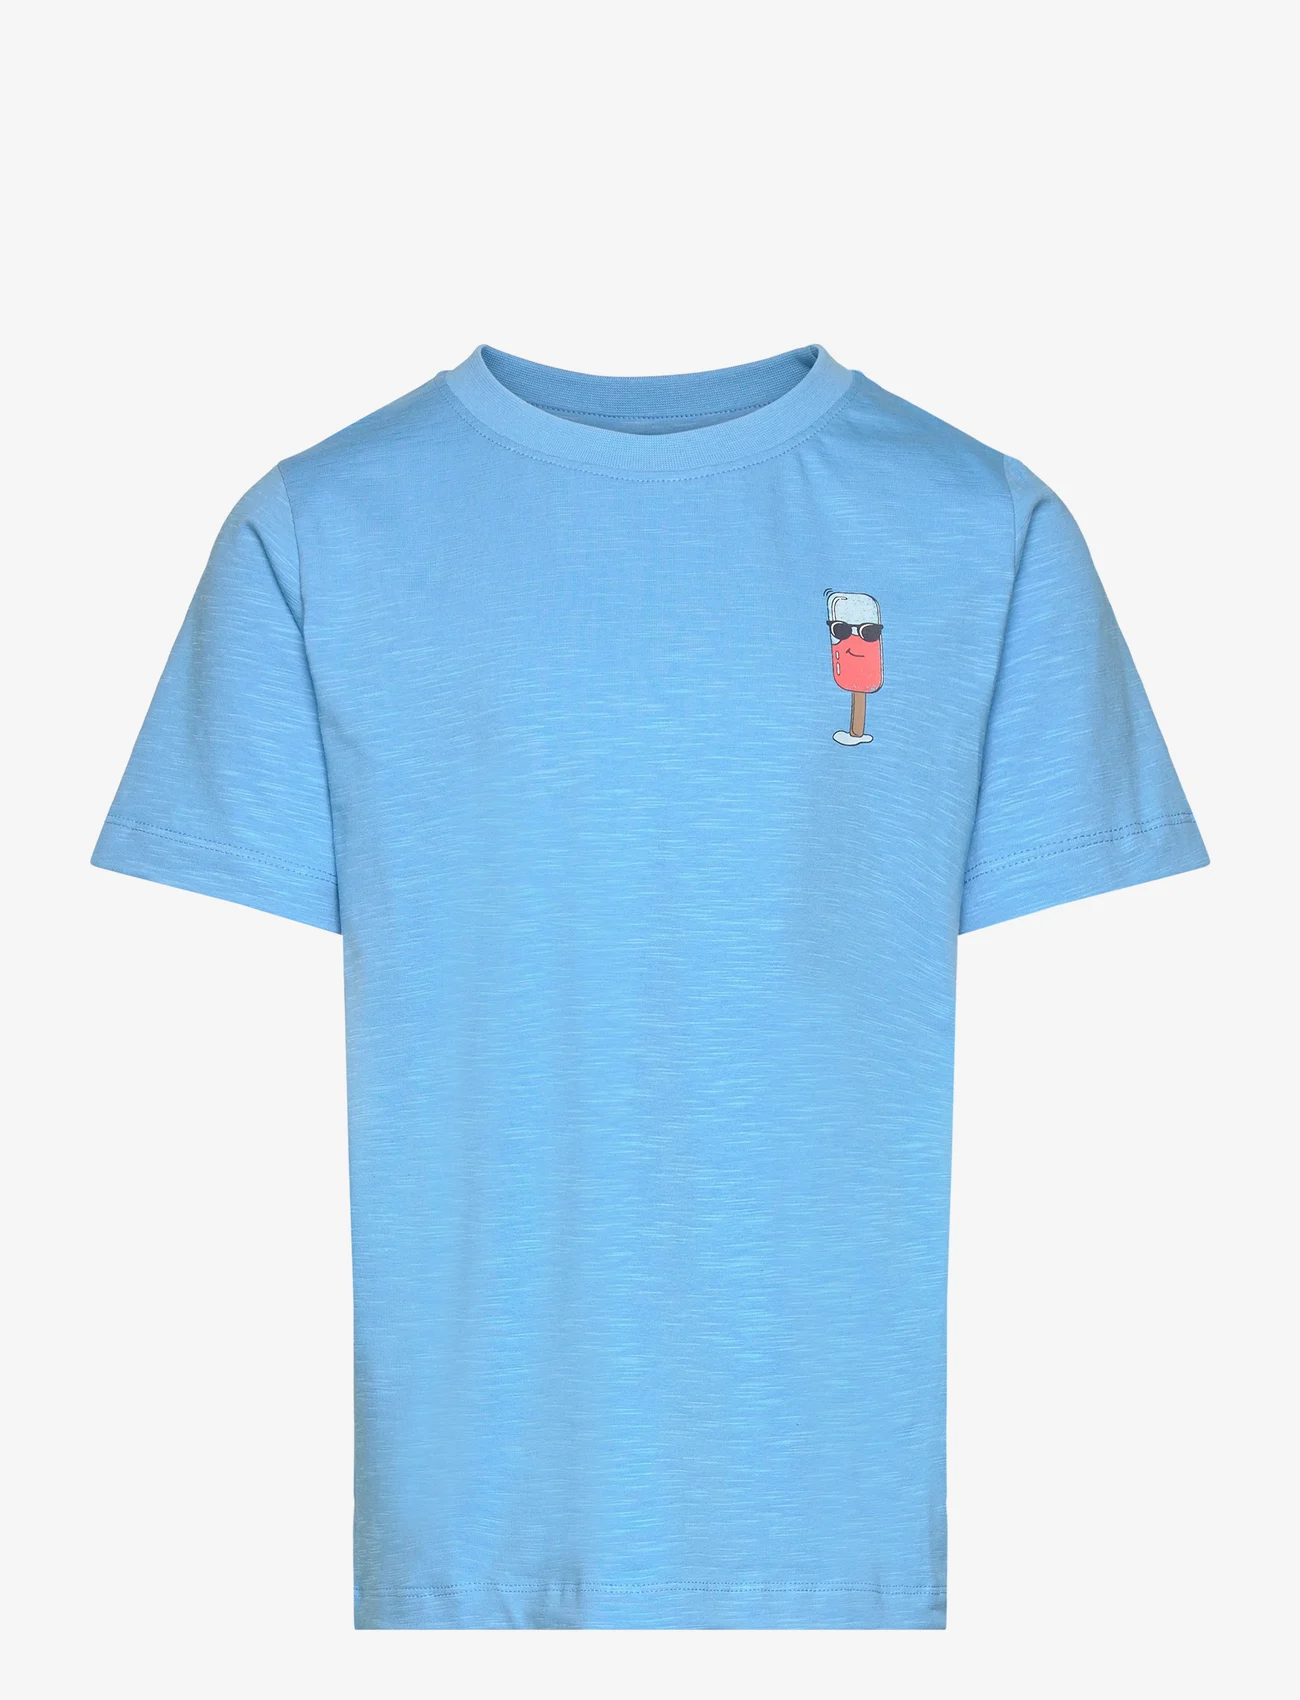 Minymo - T-shirt SS - kurzärmelige - bonnie blue - 0